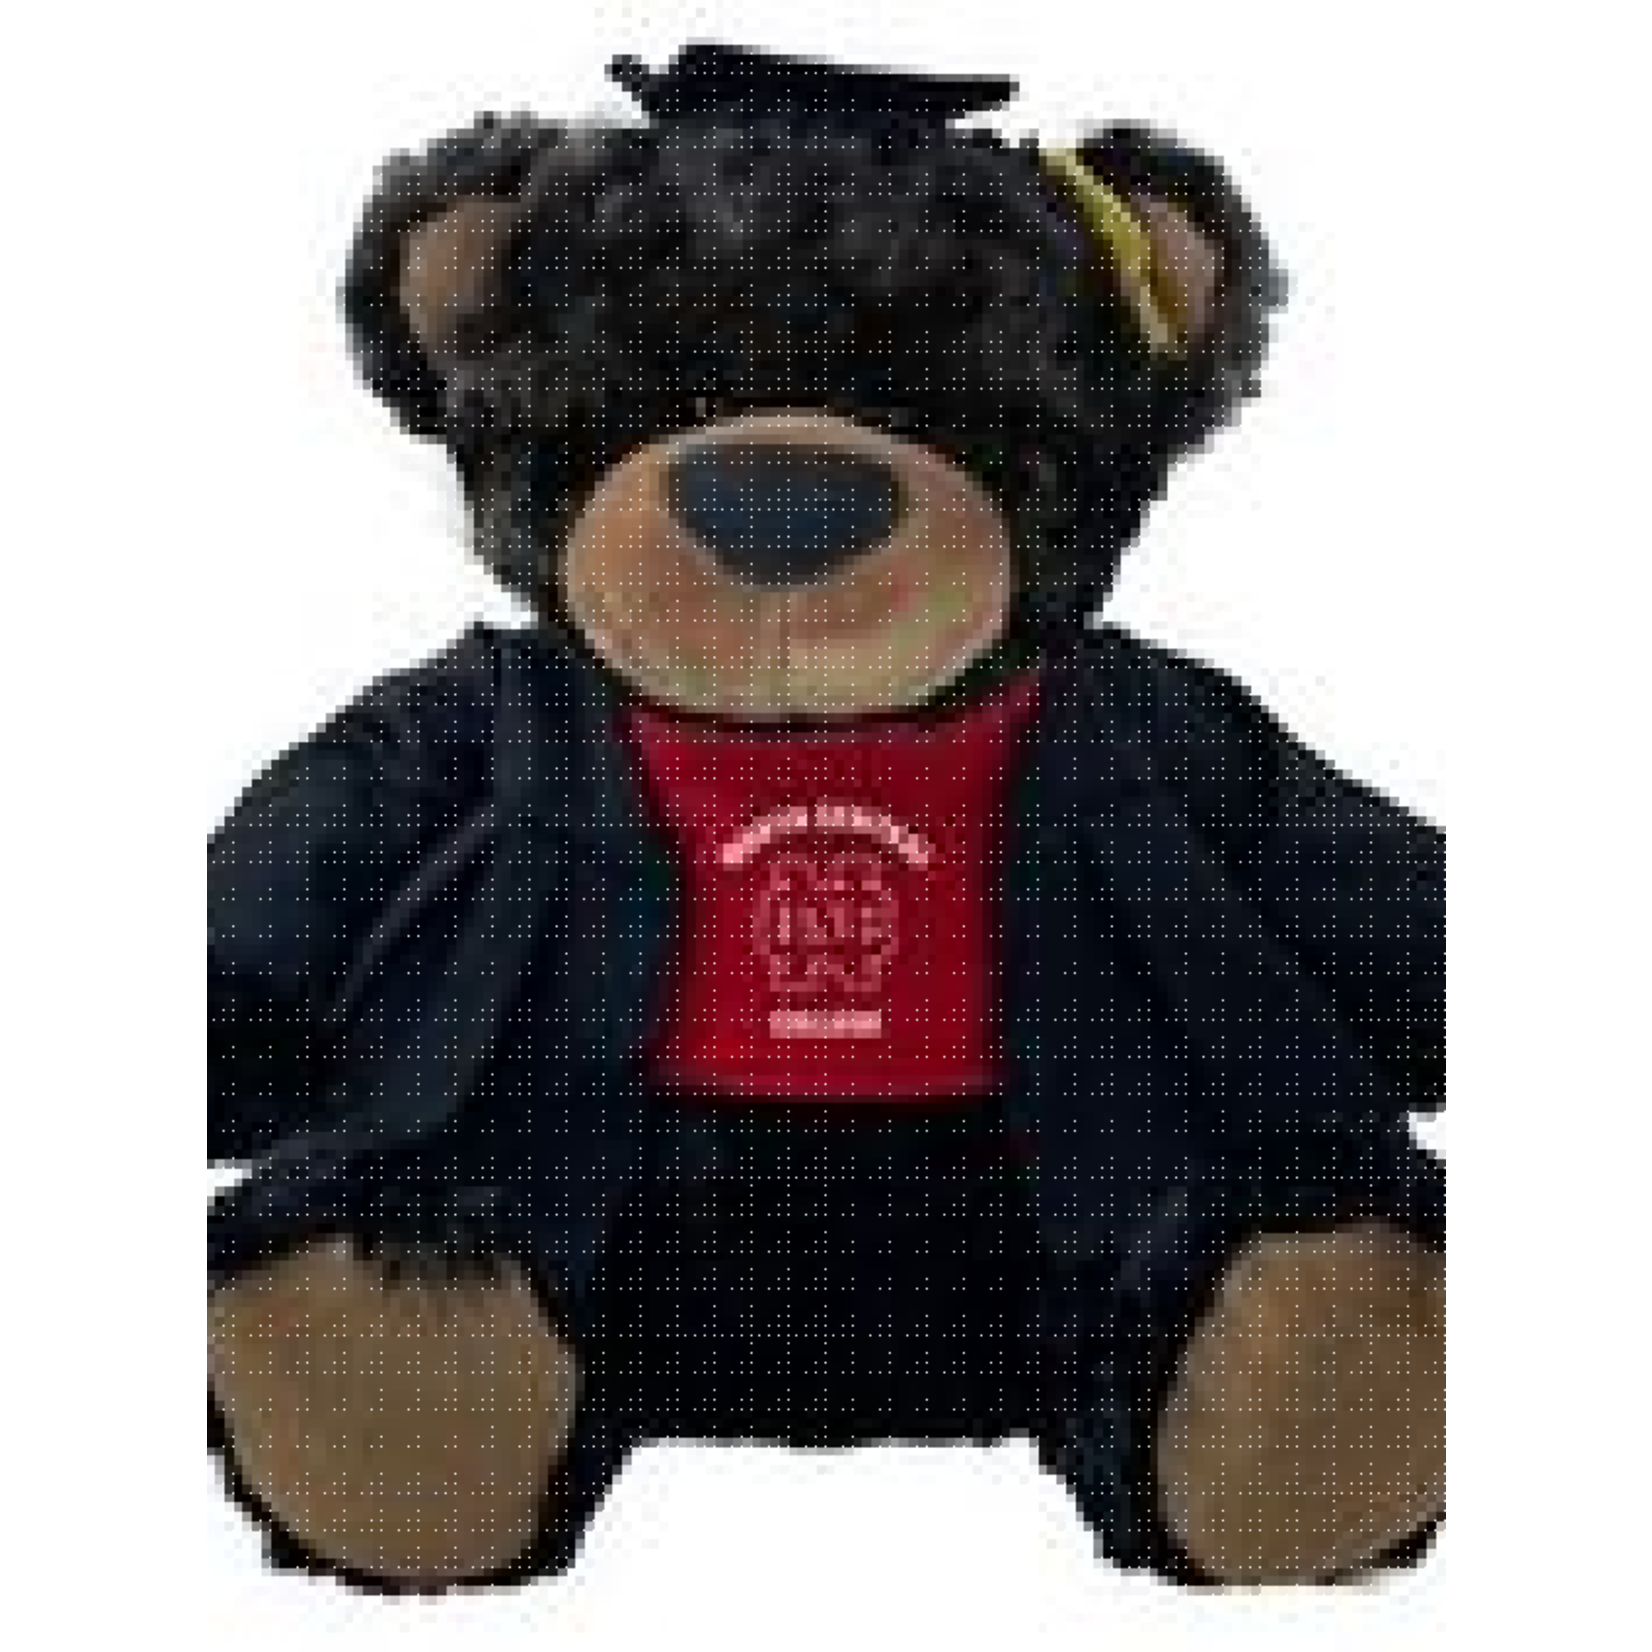 Mascot Factory North Central College  Grad Bears